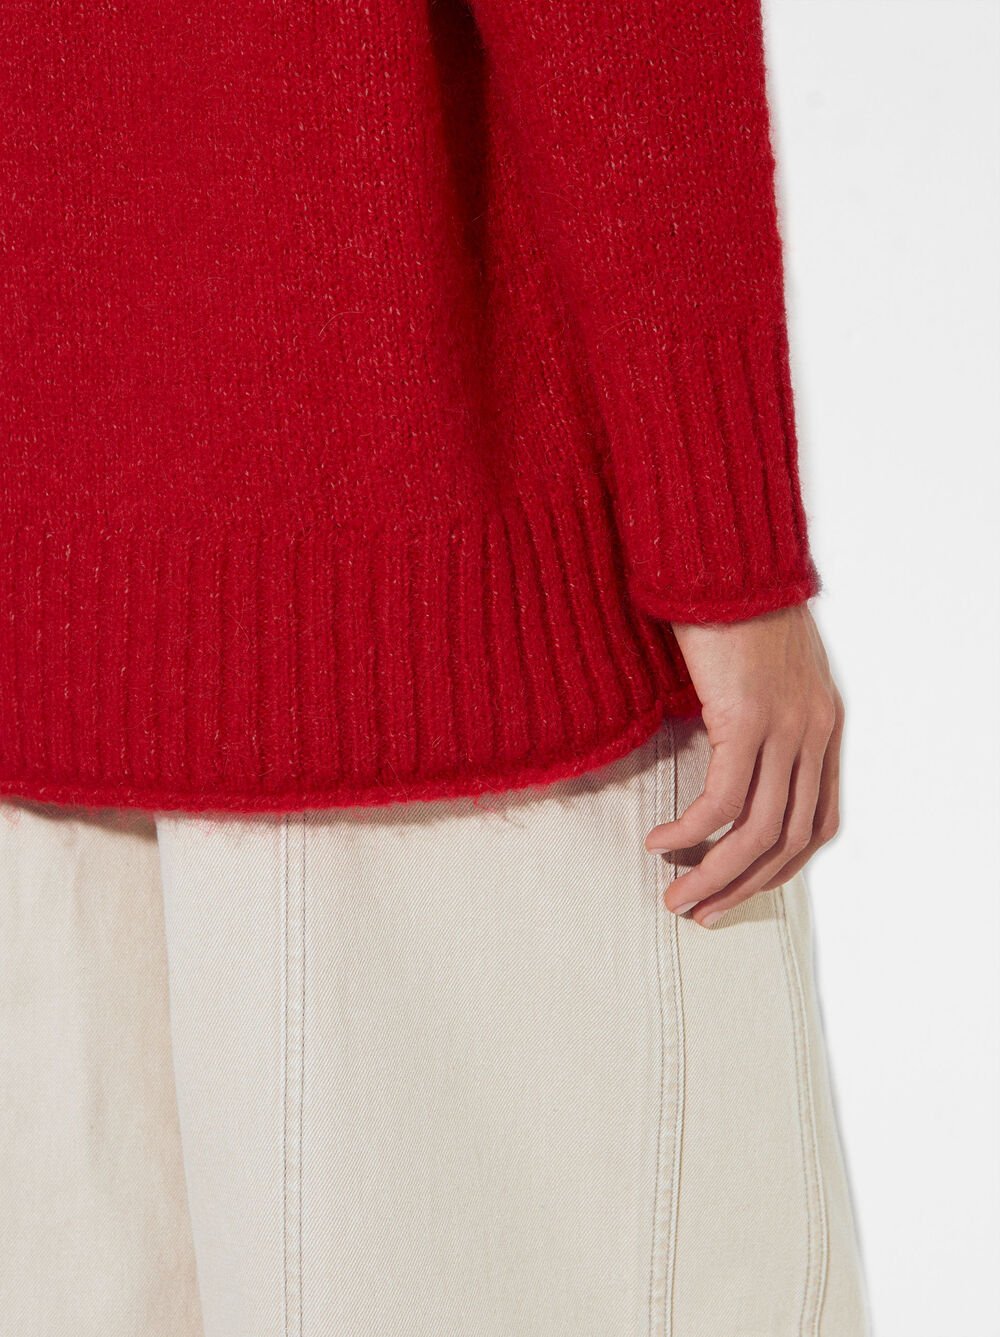 Exclusivo Online - Camisola De Malha Com Lã